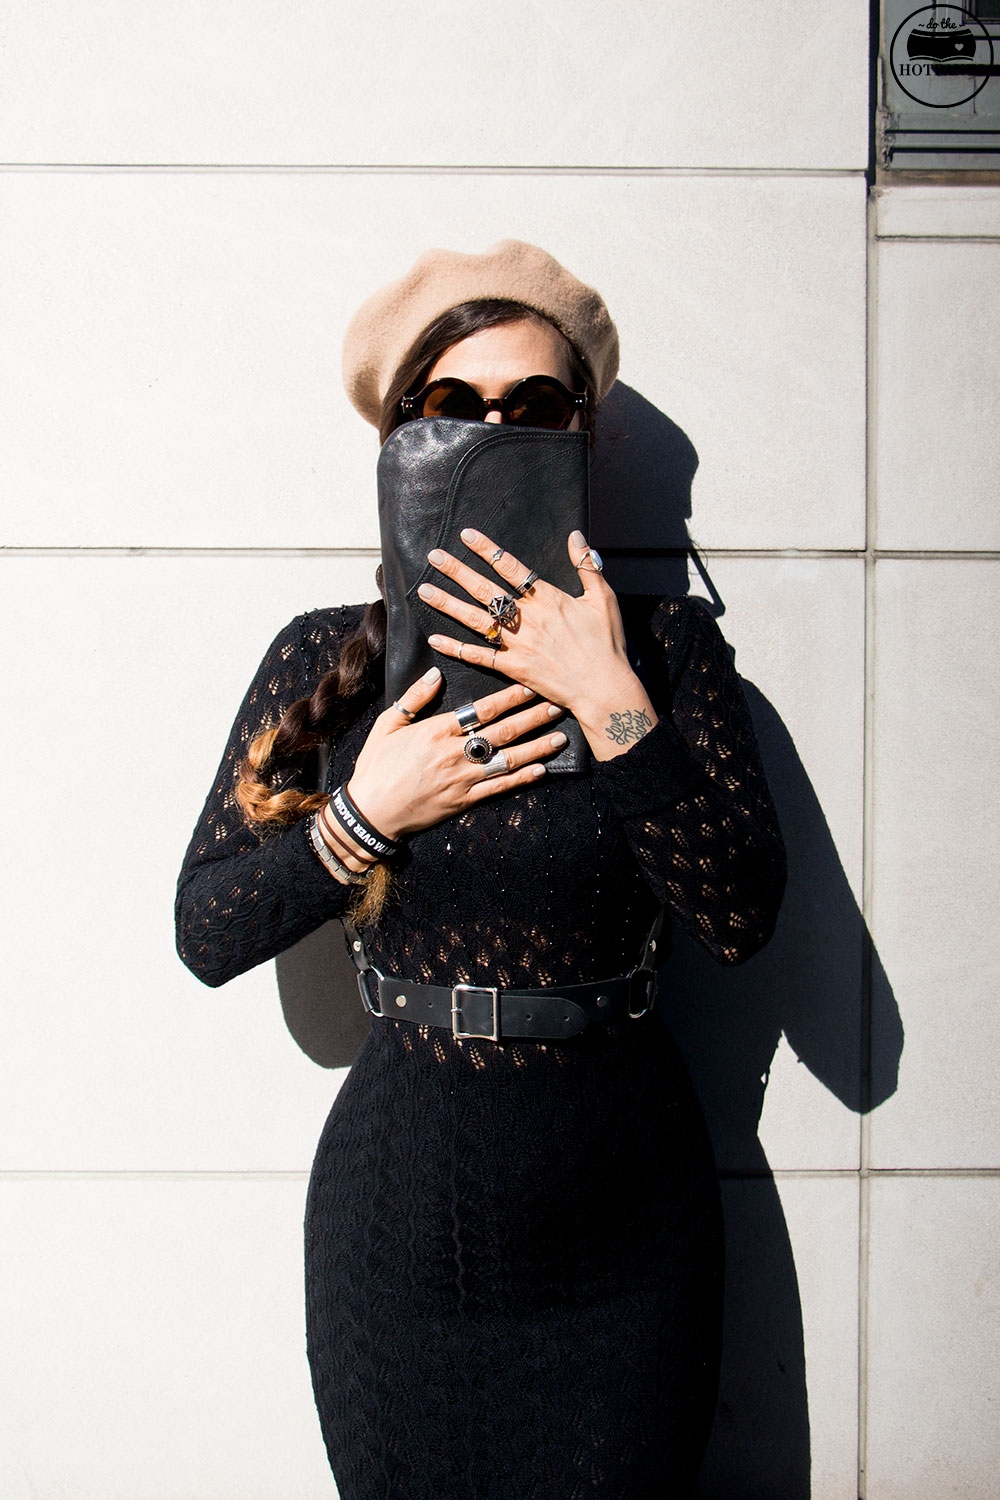 Zana Bayne Leather Harness Round Sunglasses Fashion